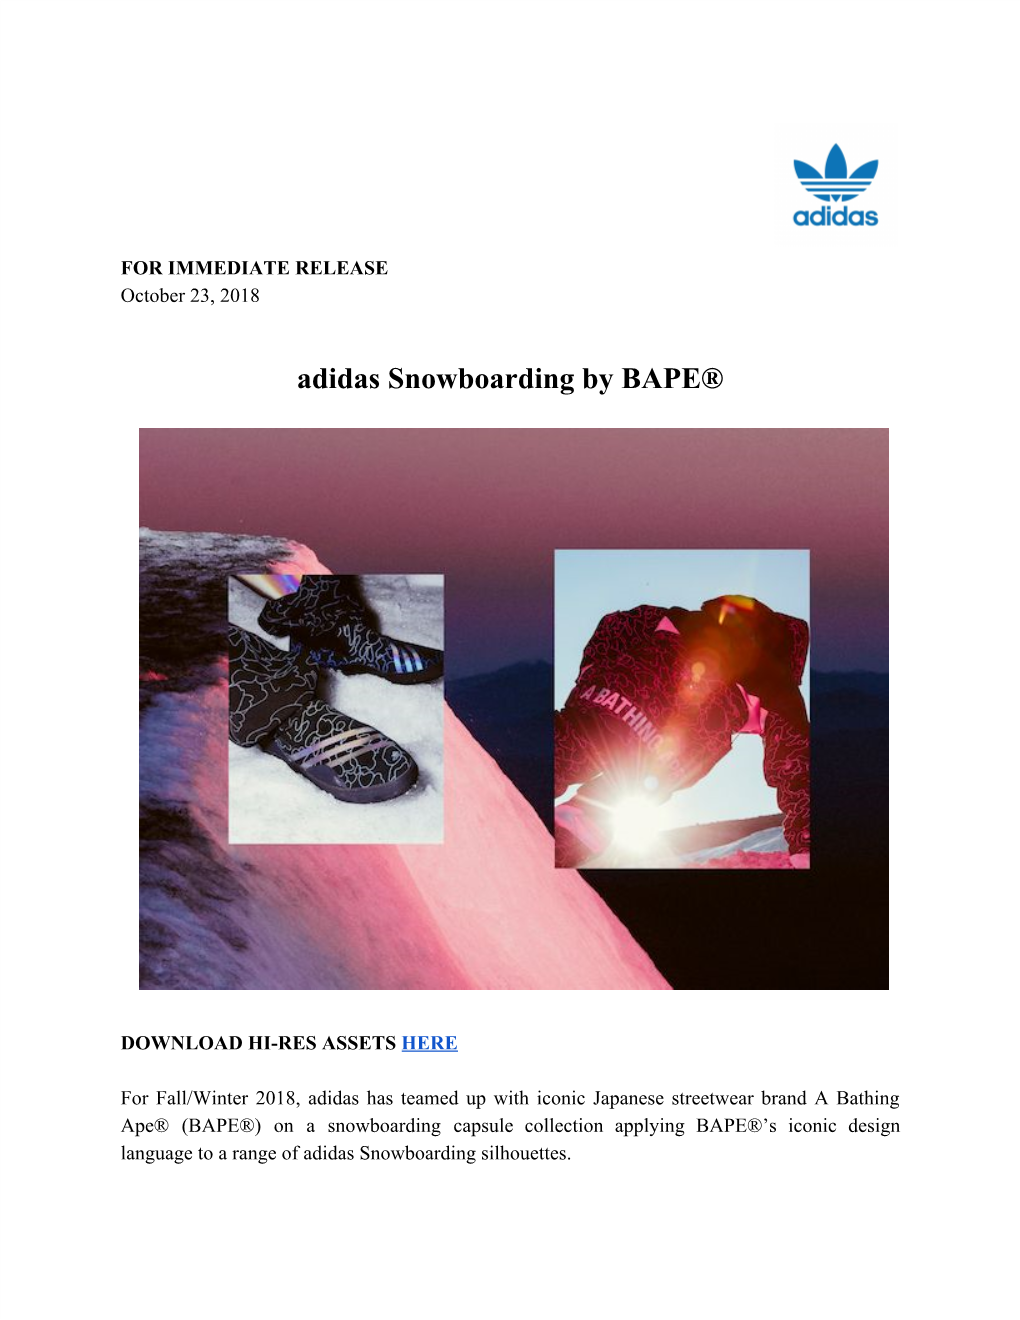 Adidas Snowboarding by BAPE®